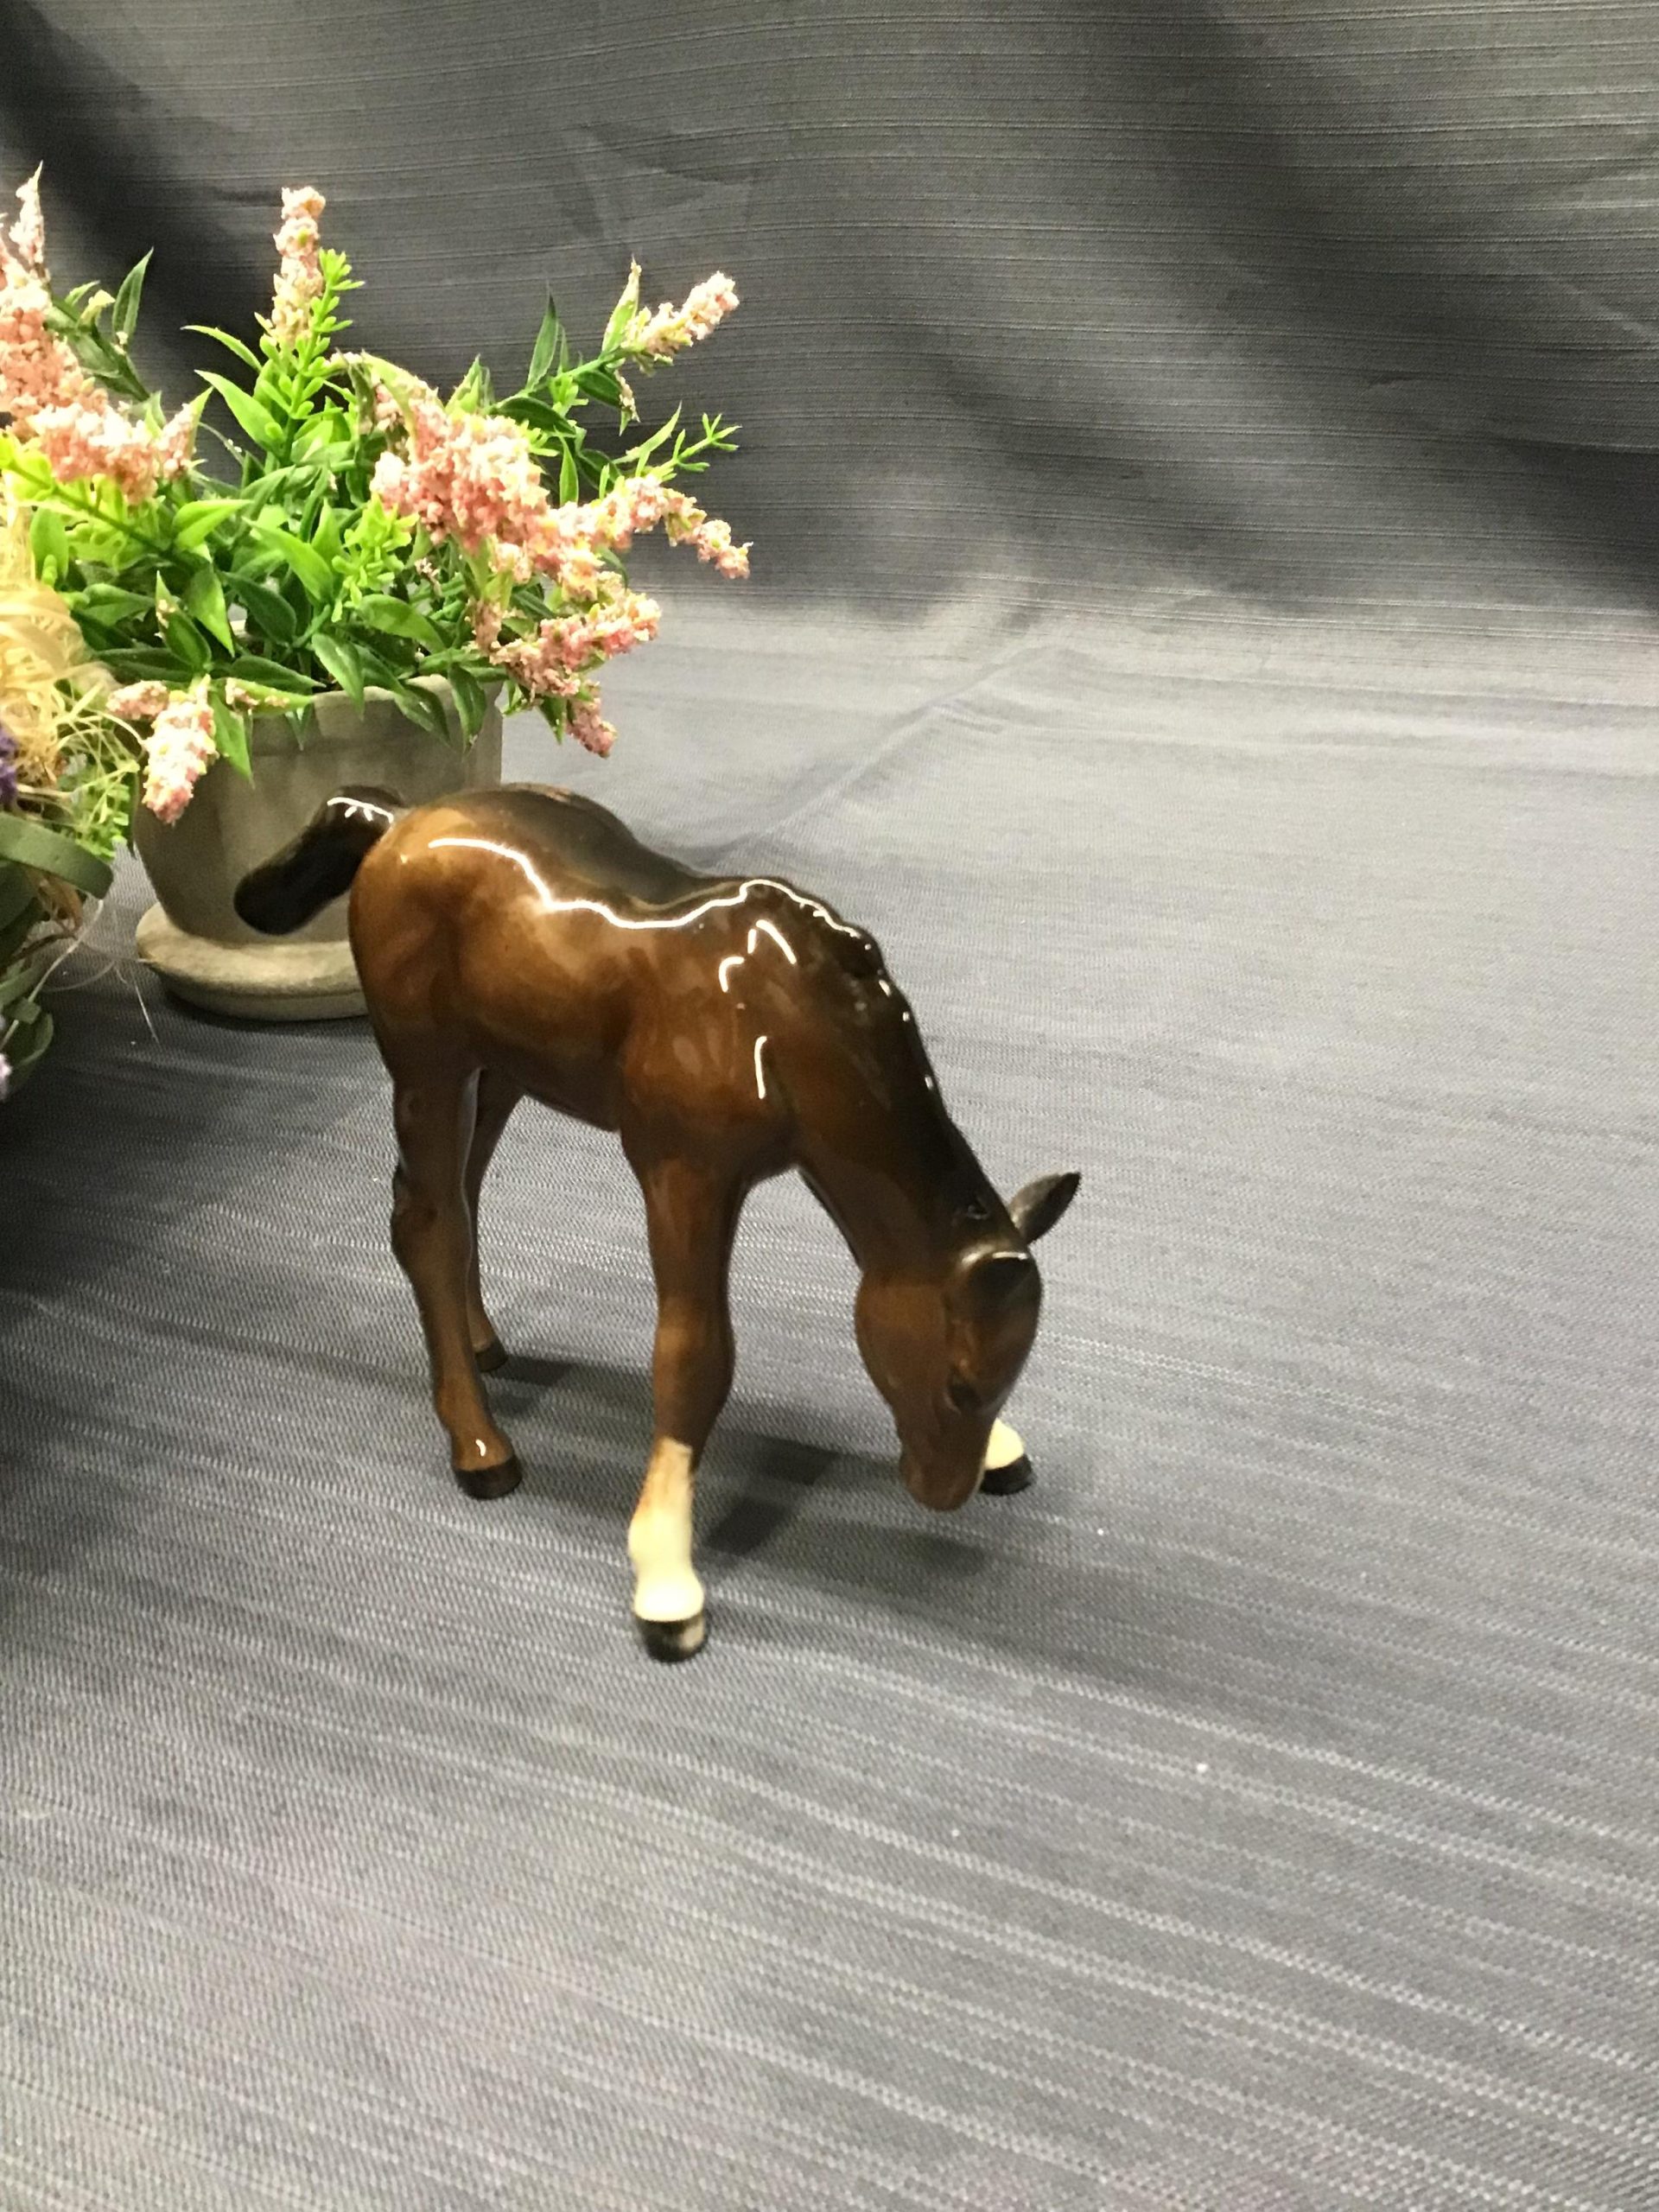 BESWICK Porcelain Foal (eating grass)